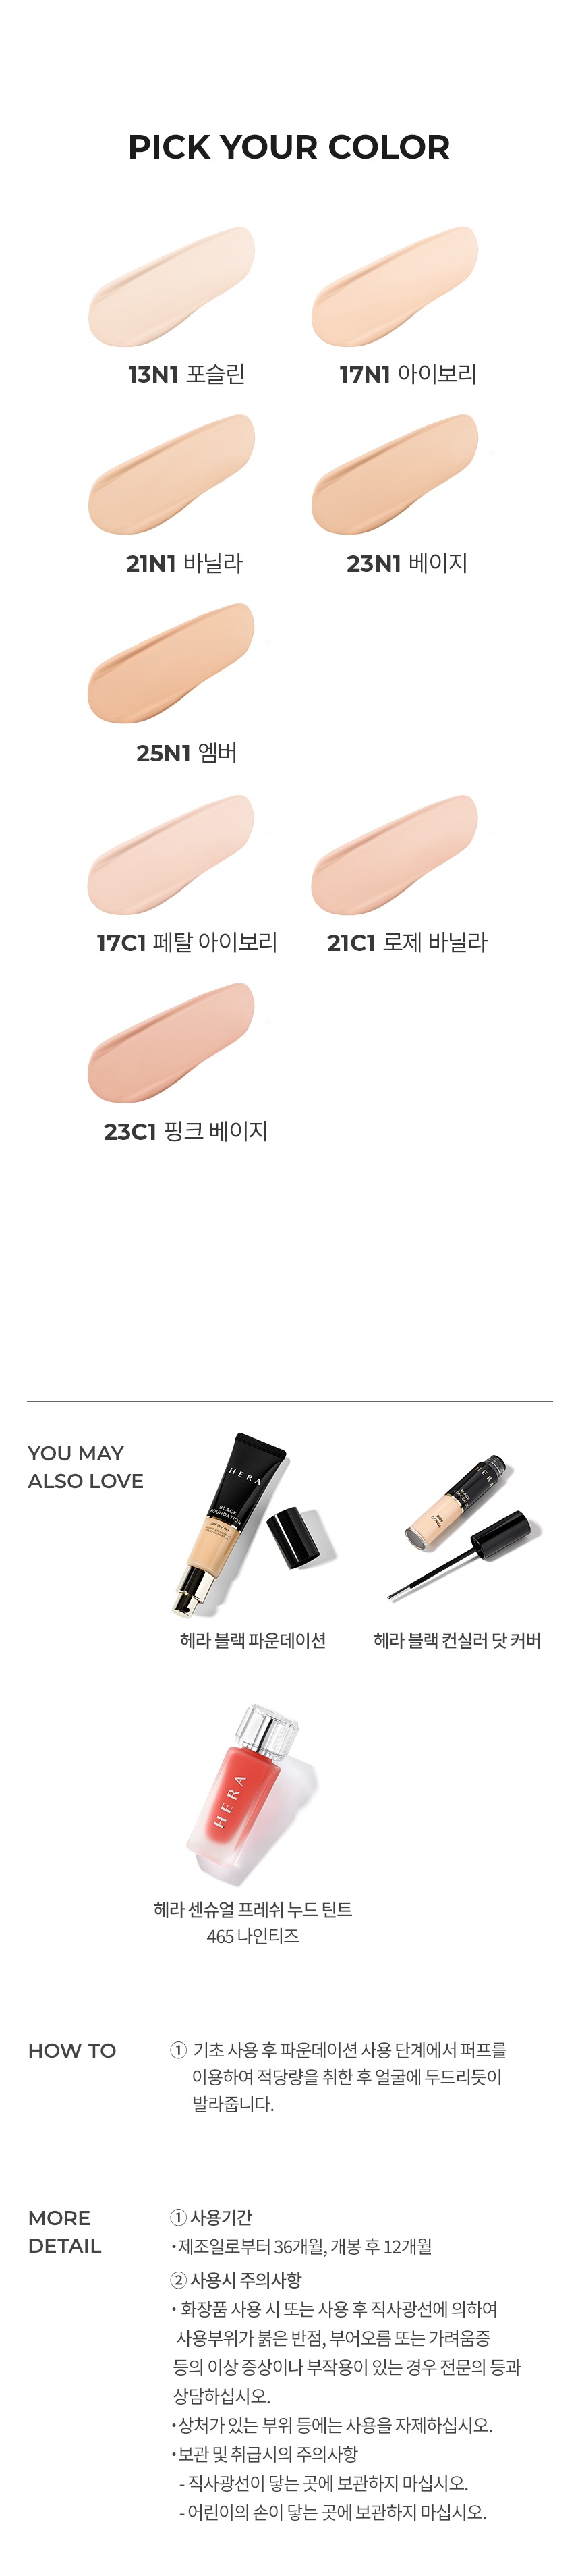 Hera New Black Cushion korean cosmetic product online shop malaysia China india4